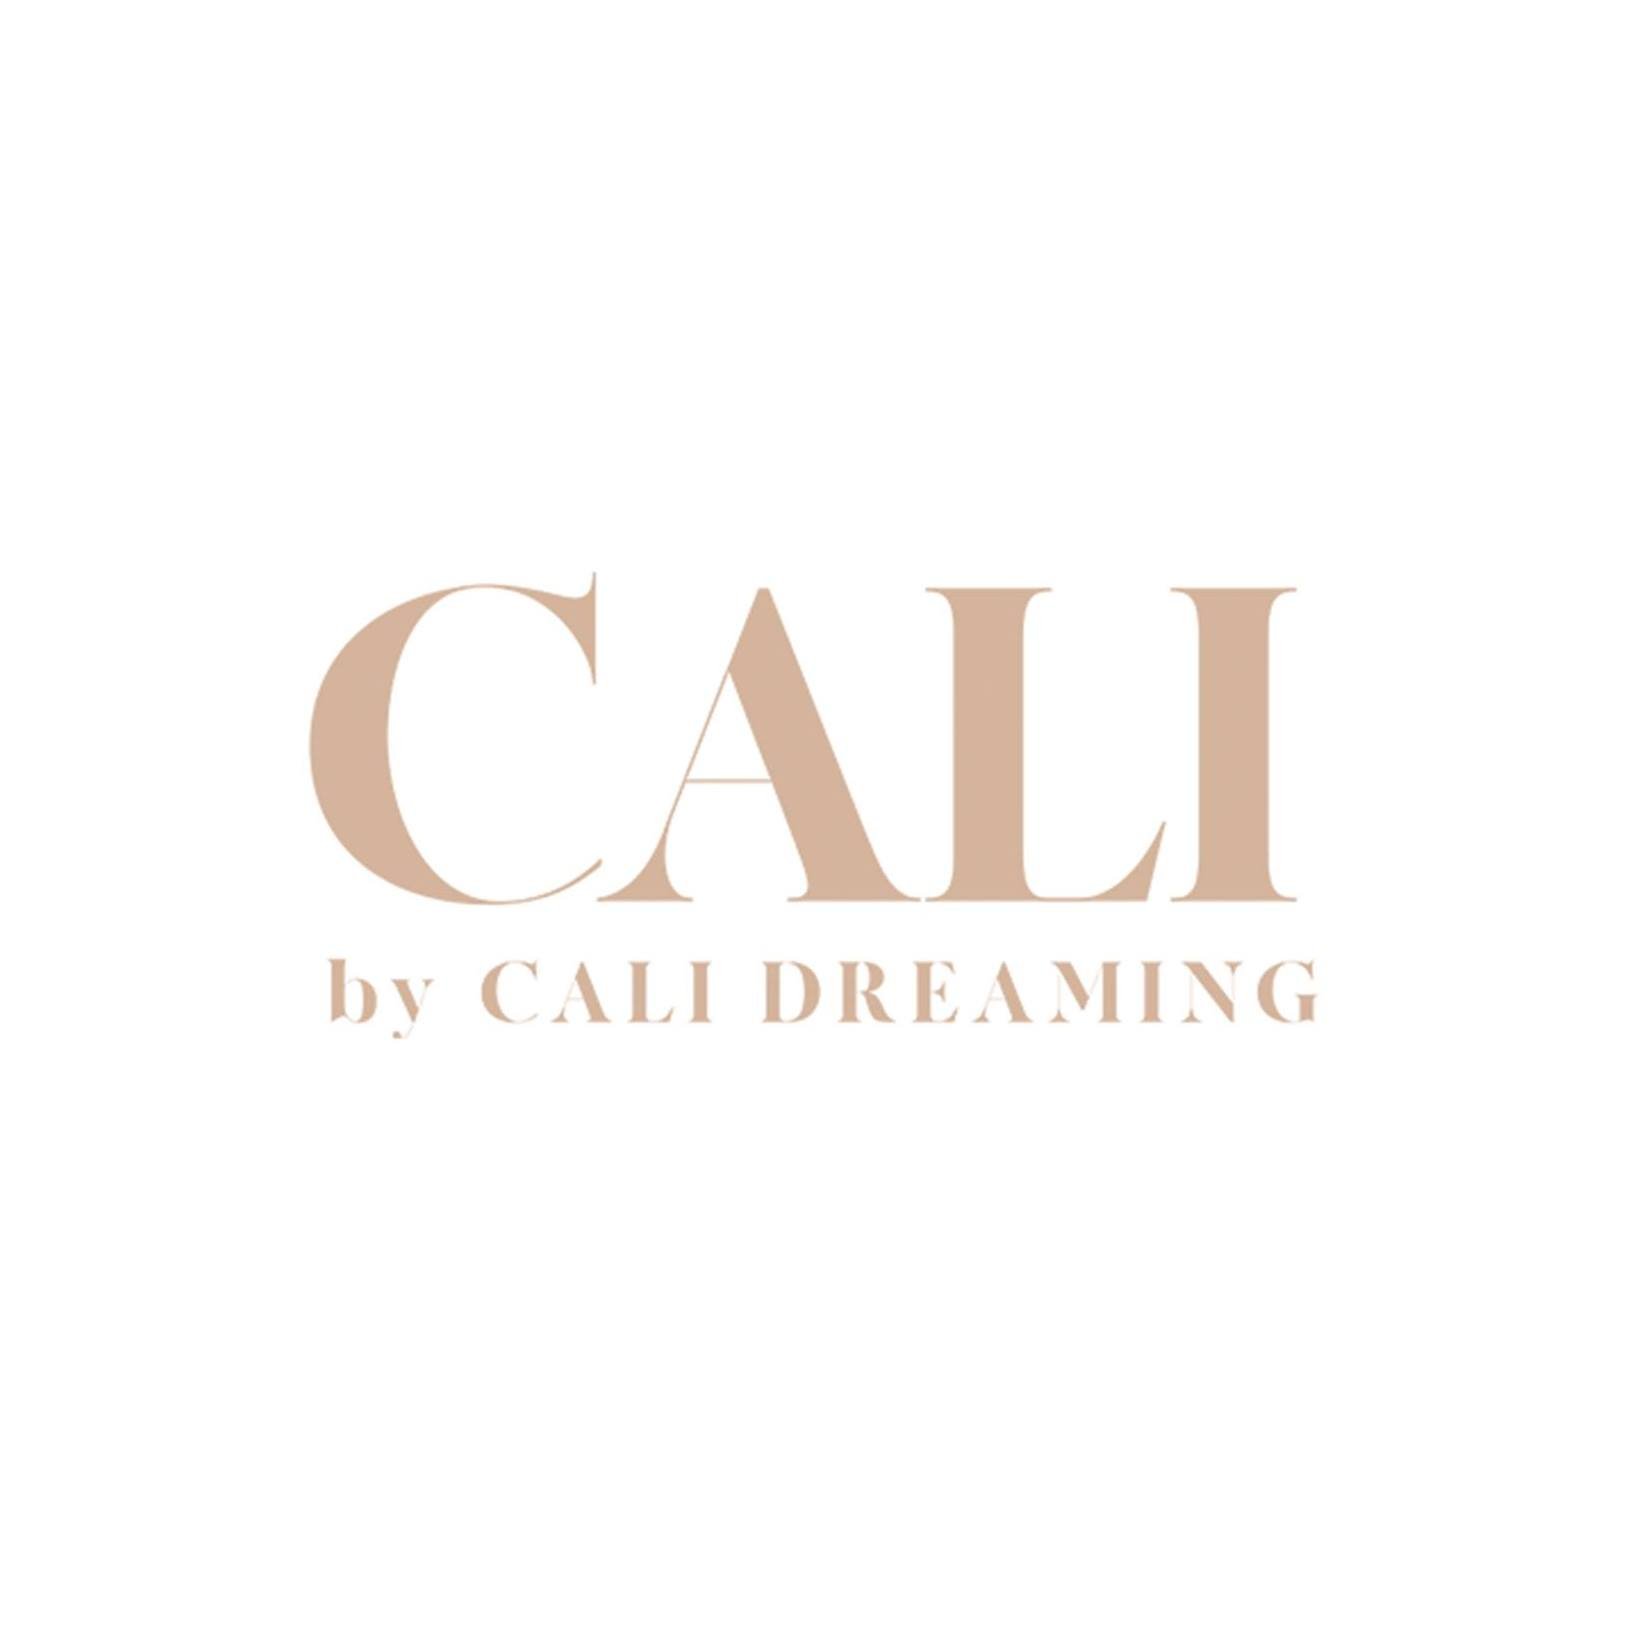 CALI by CALi DREAMiNG (CALi DREAMiNG) Розмірні таблиці